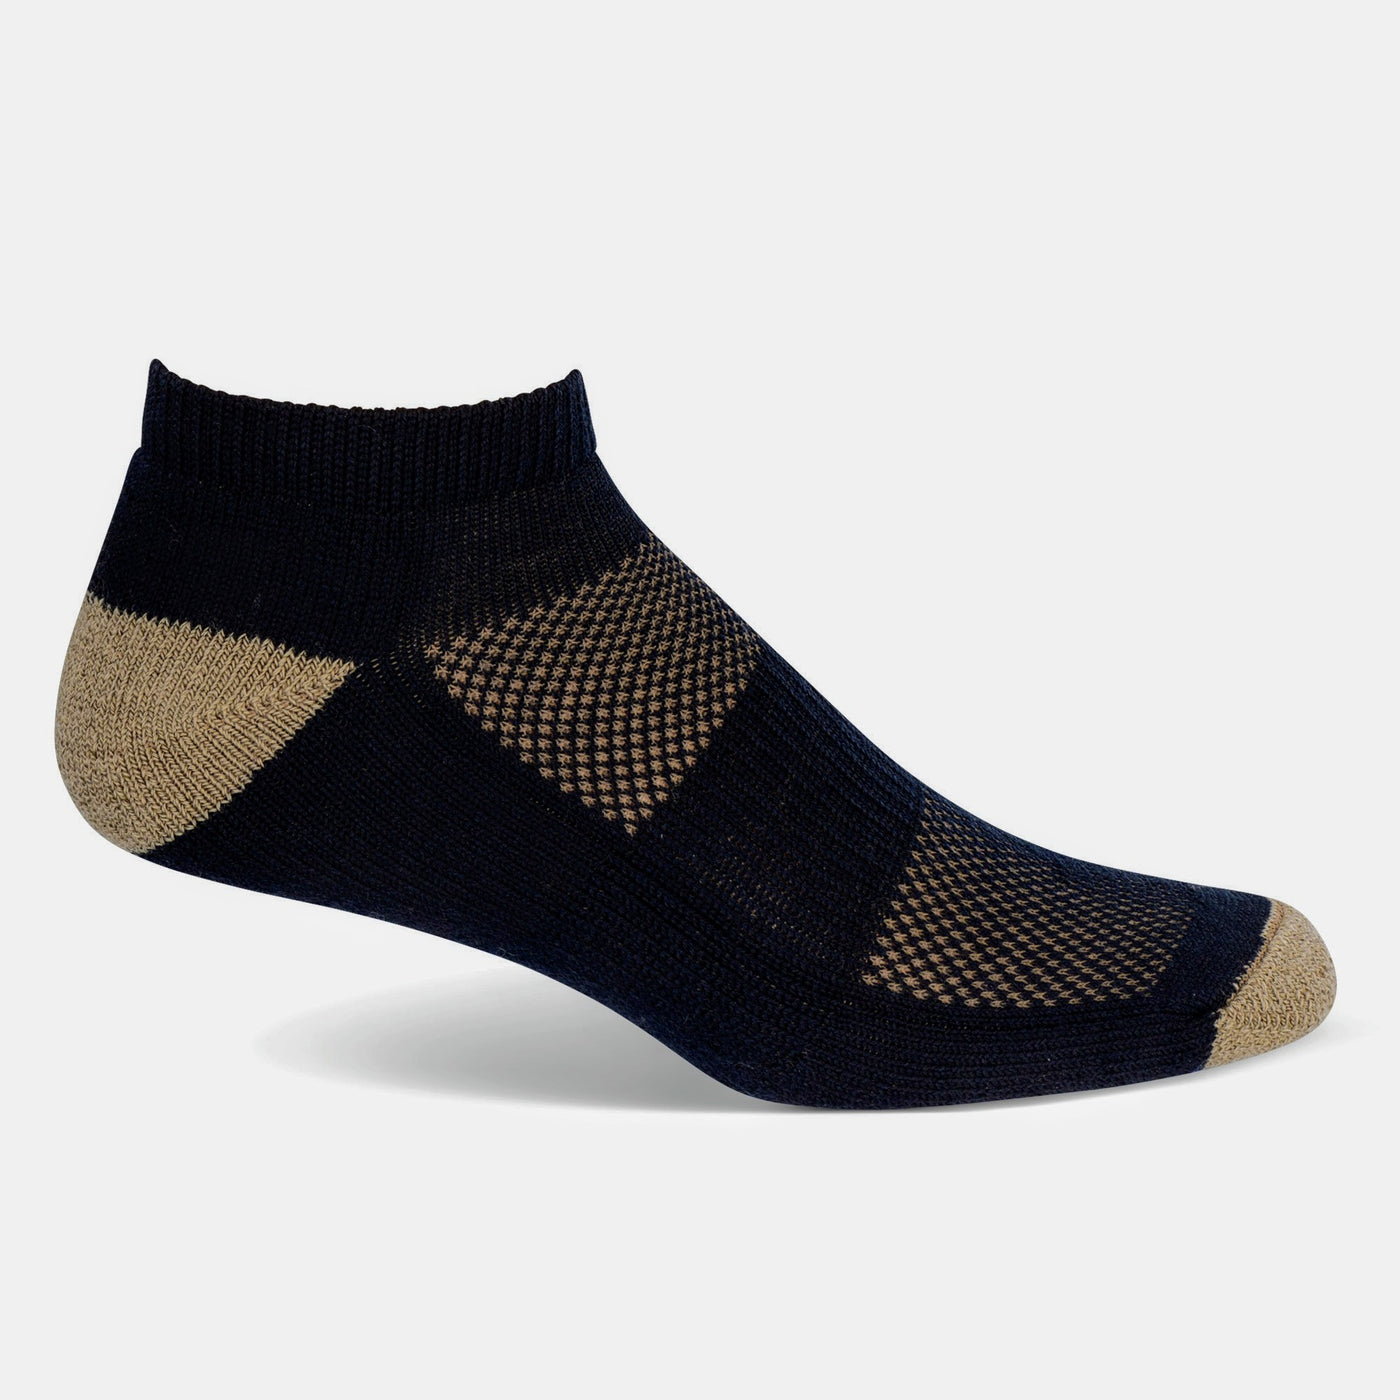 J.B. Field's Merino Wool Mesh Hiker Ankle Socks